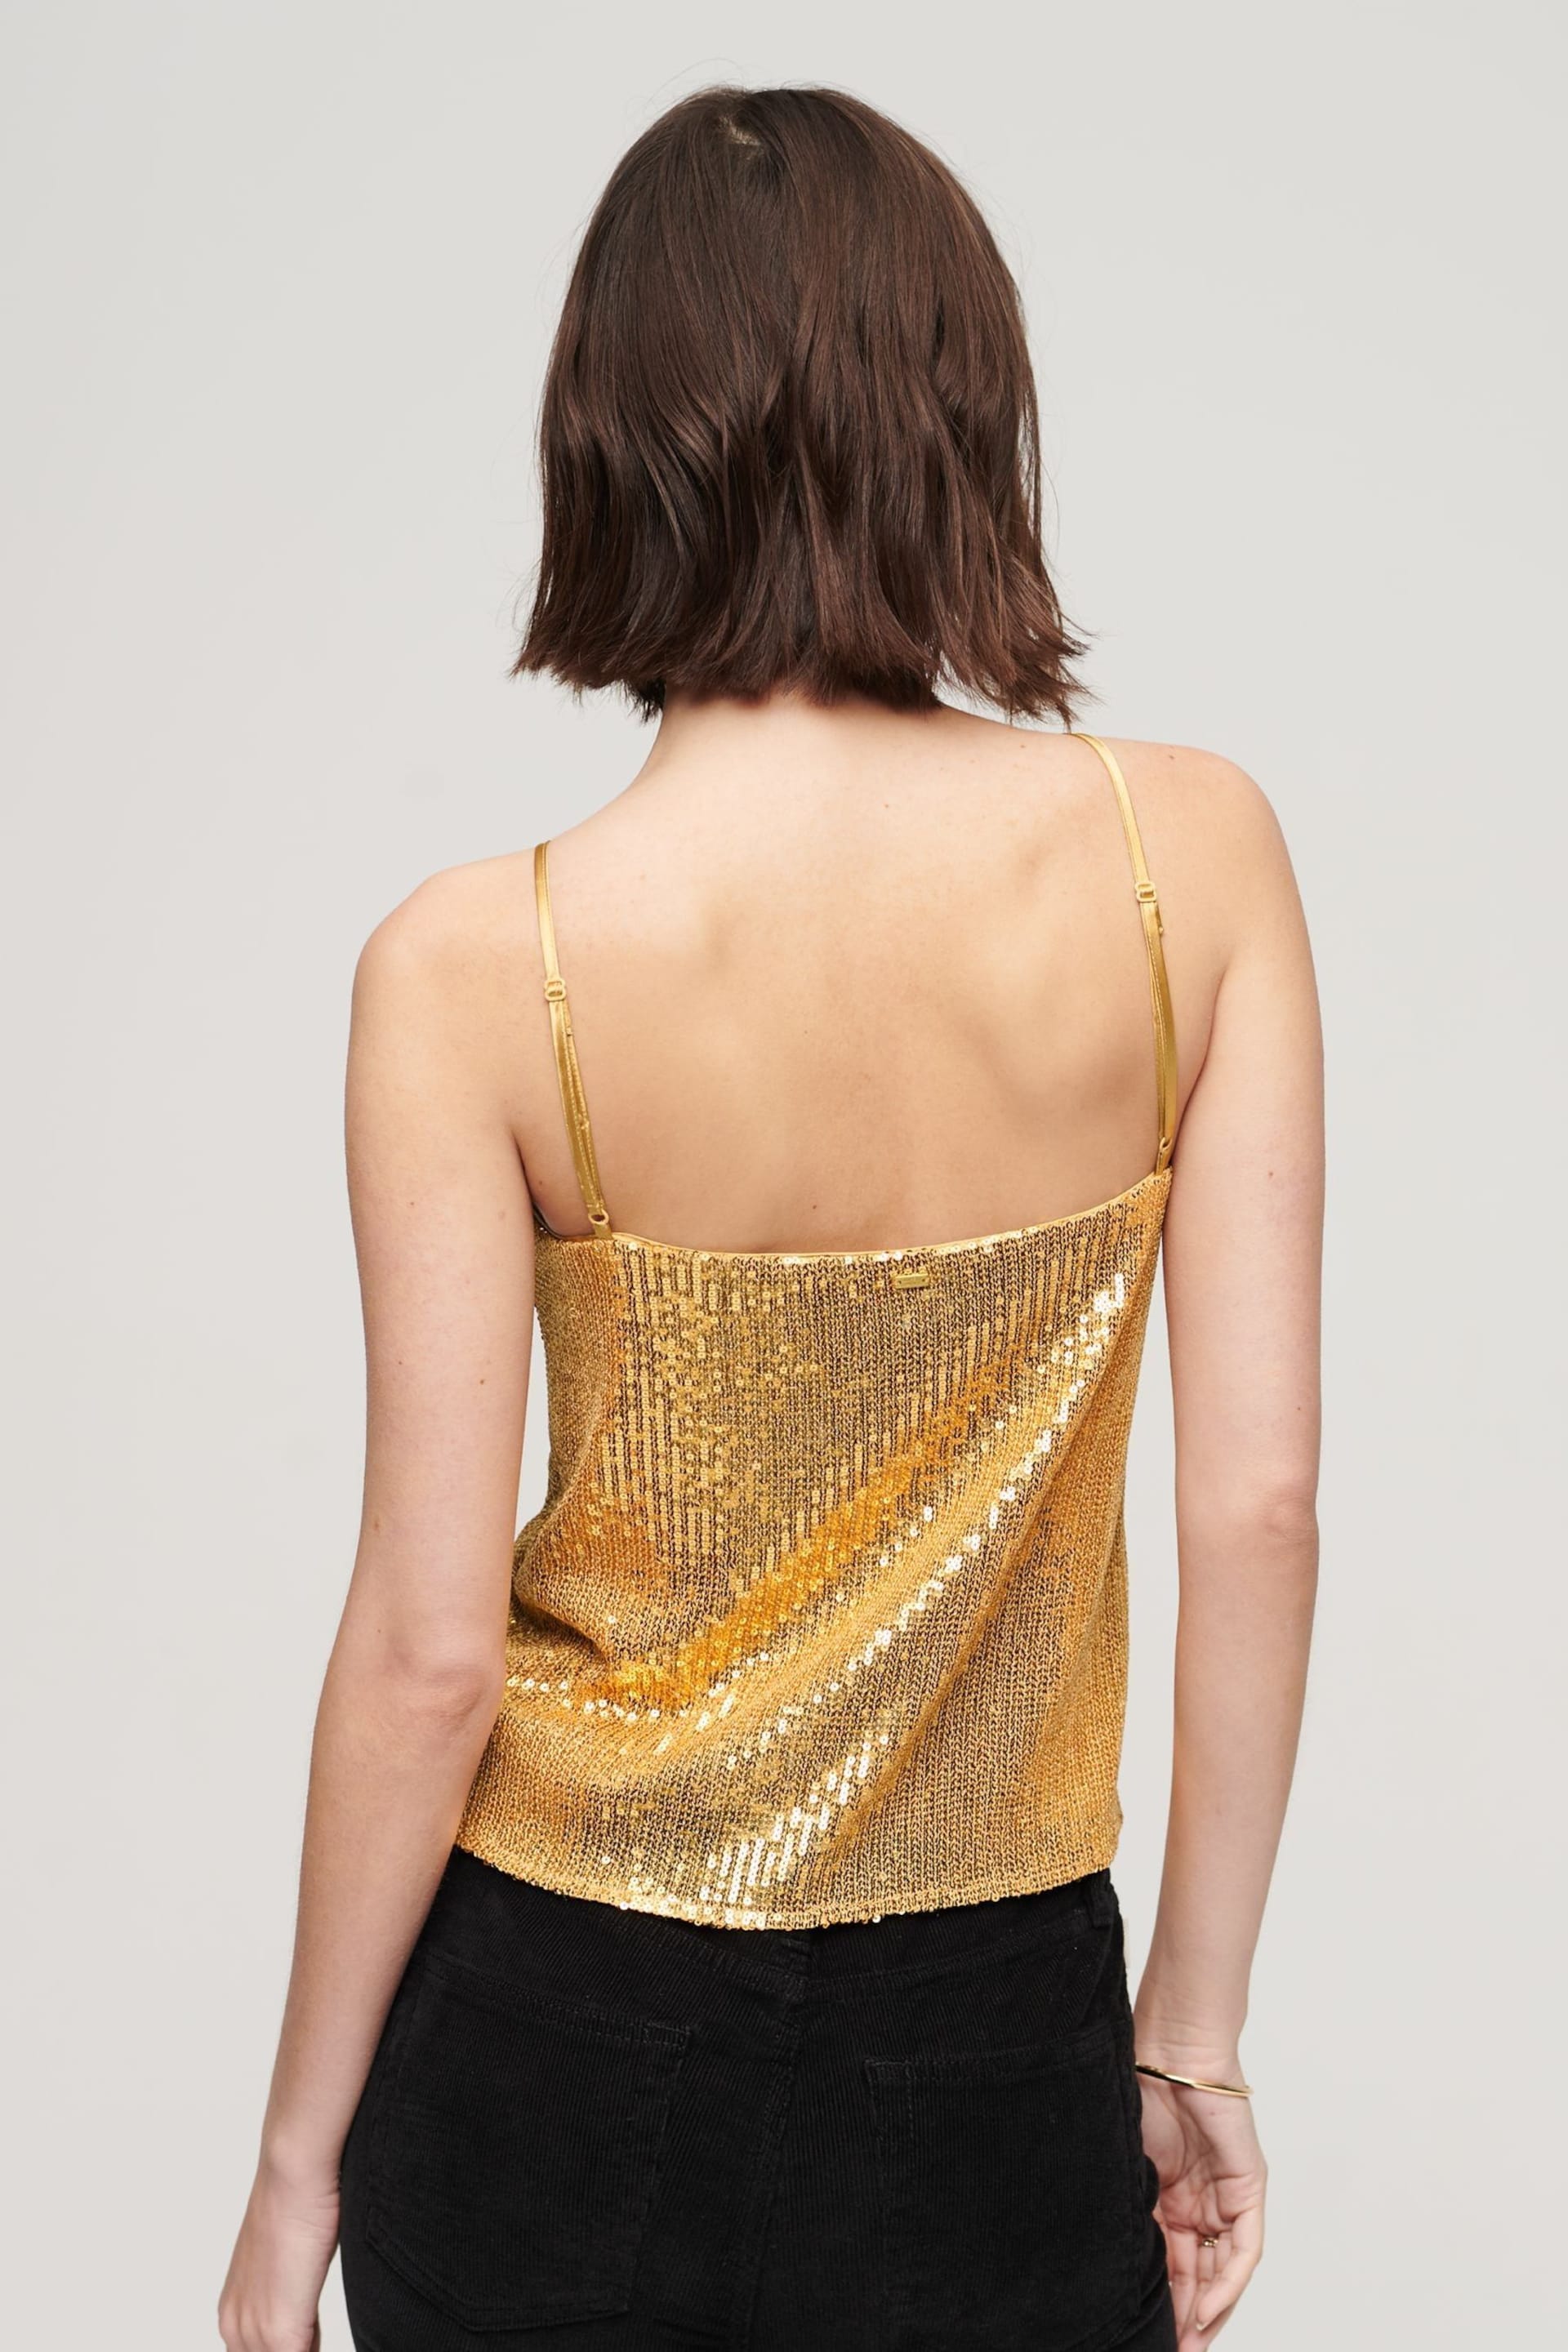 Superdry Gold Sequin Cami Vest Top - Image 3 of 5